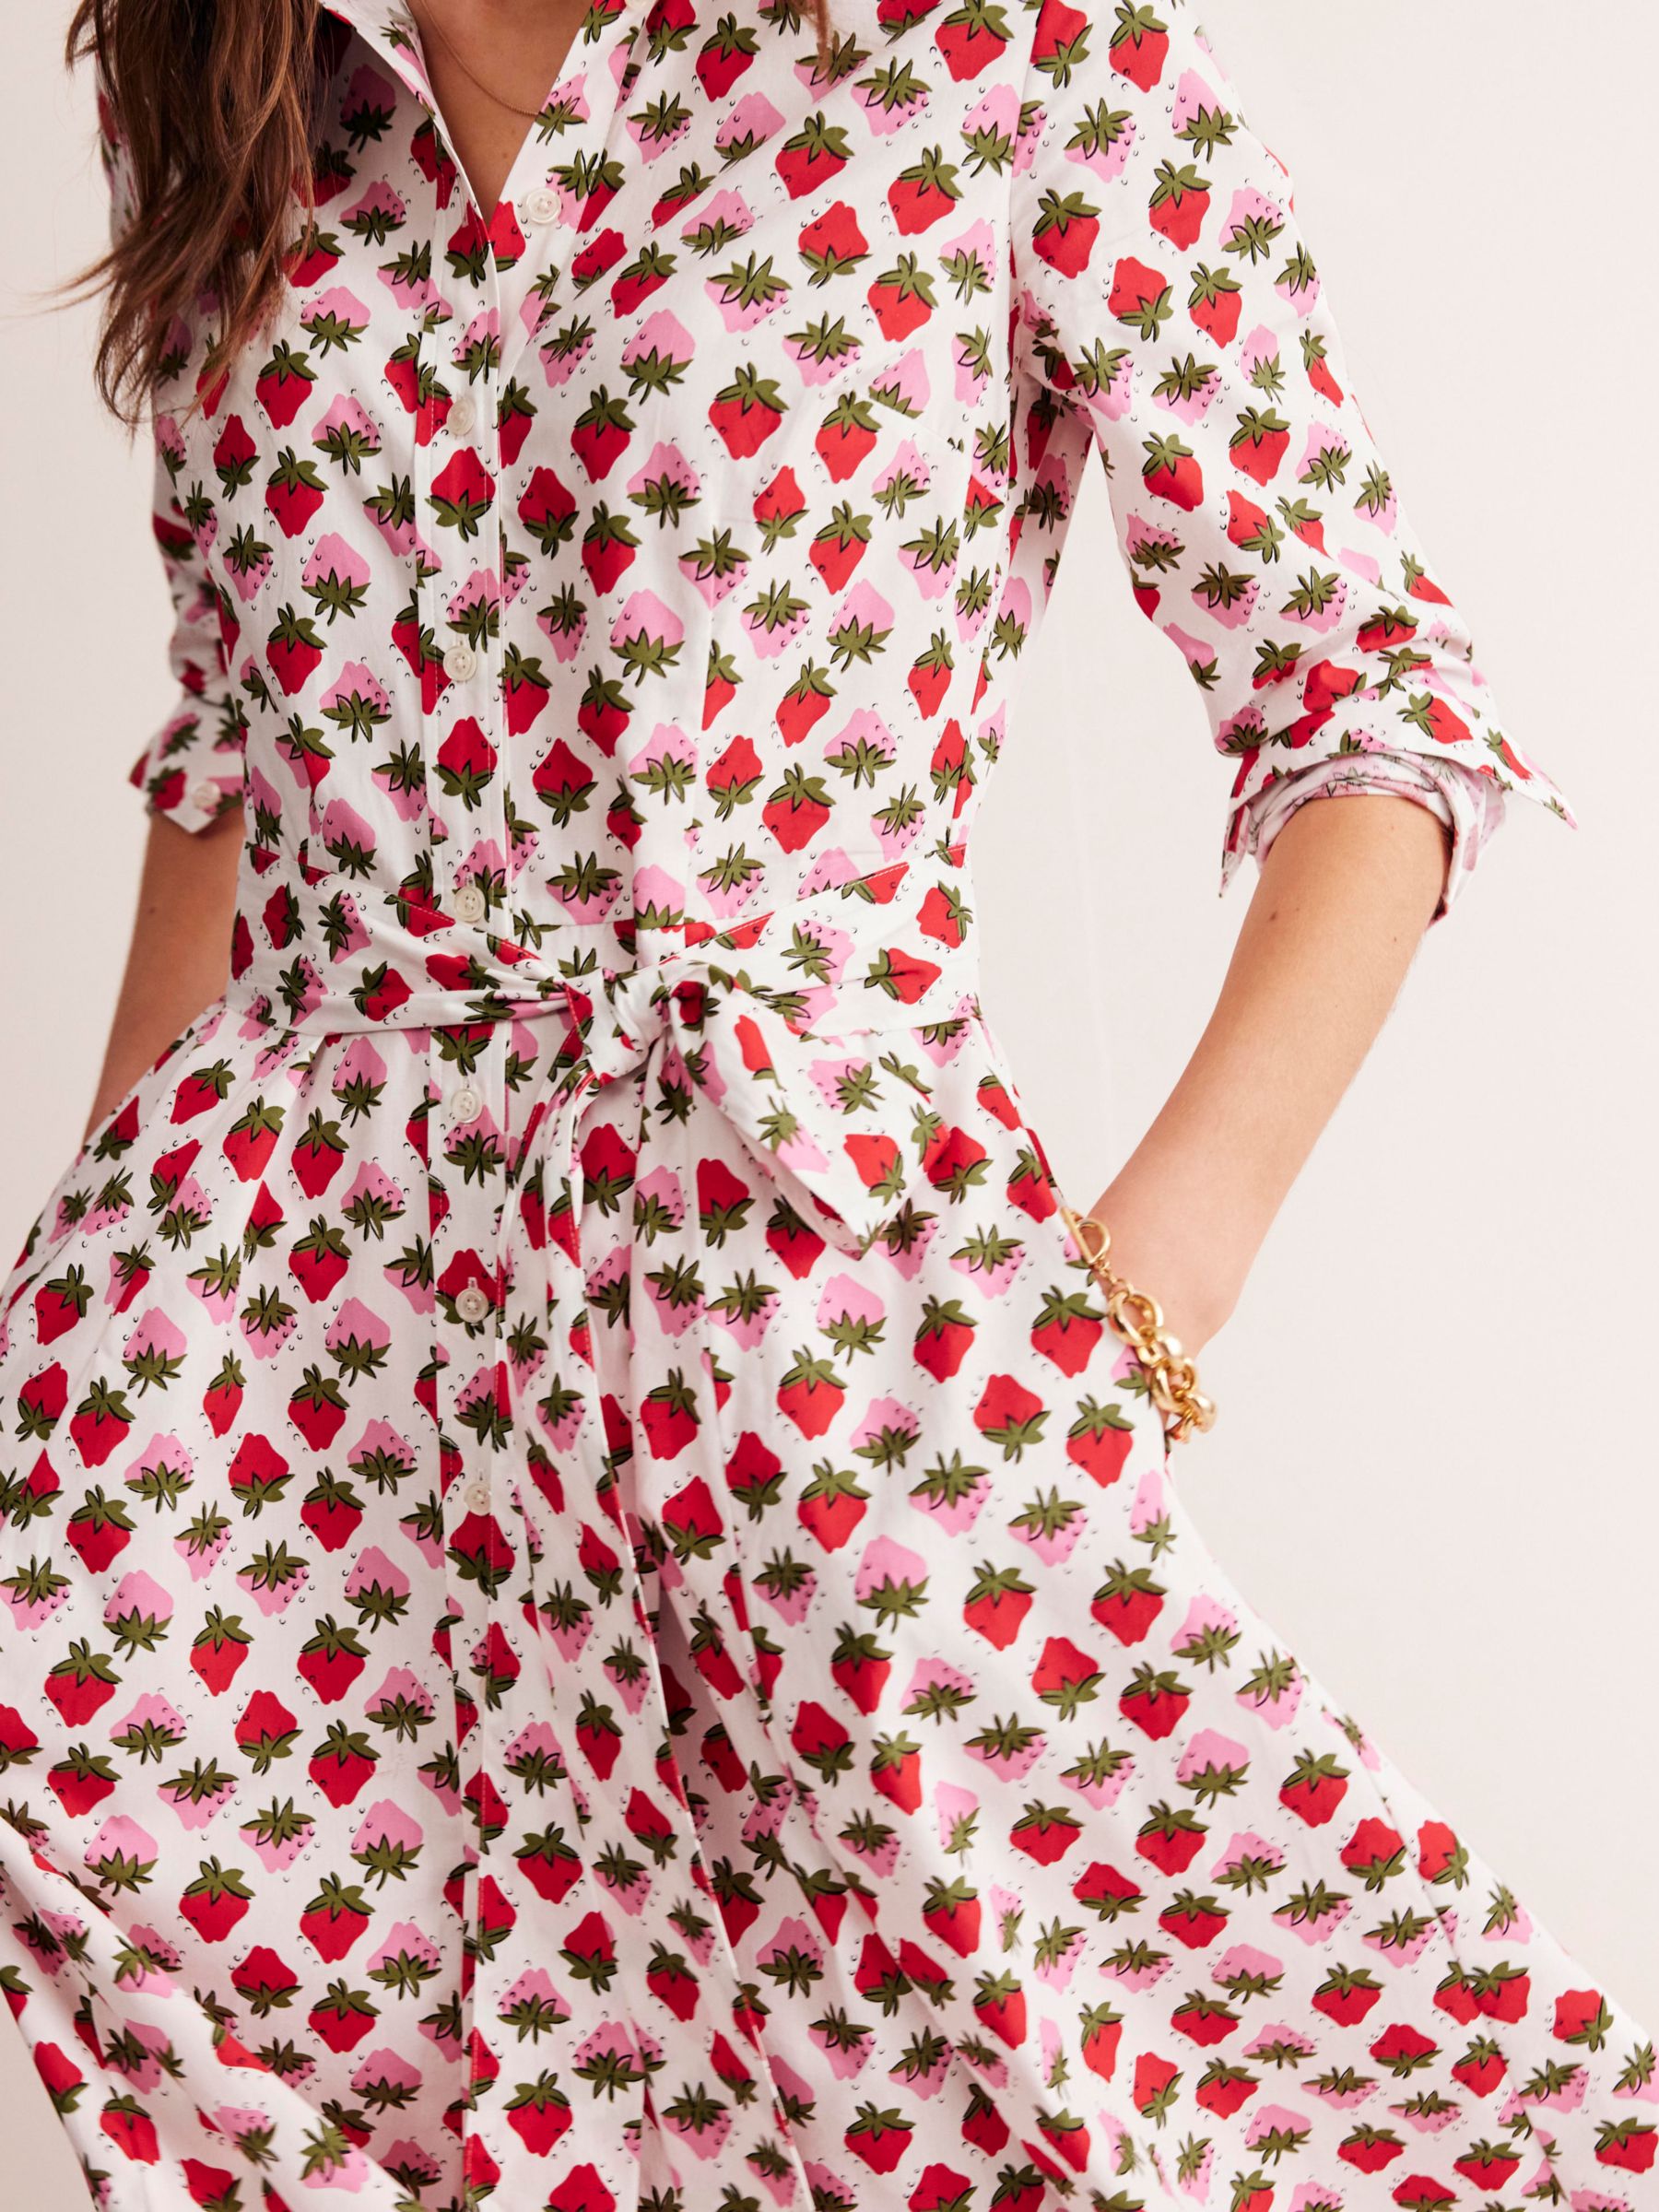 Boden Amy Strawberry Pop Shirt Dress, Ivory/Multi, 8